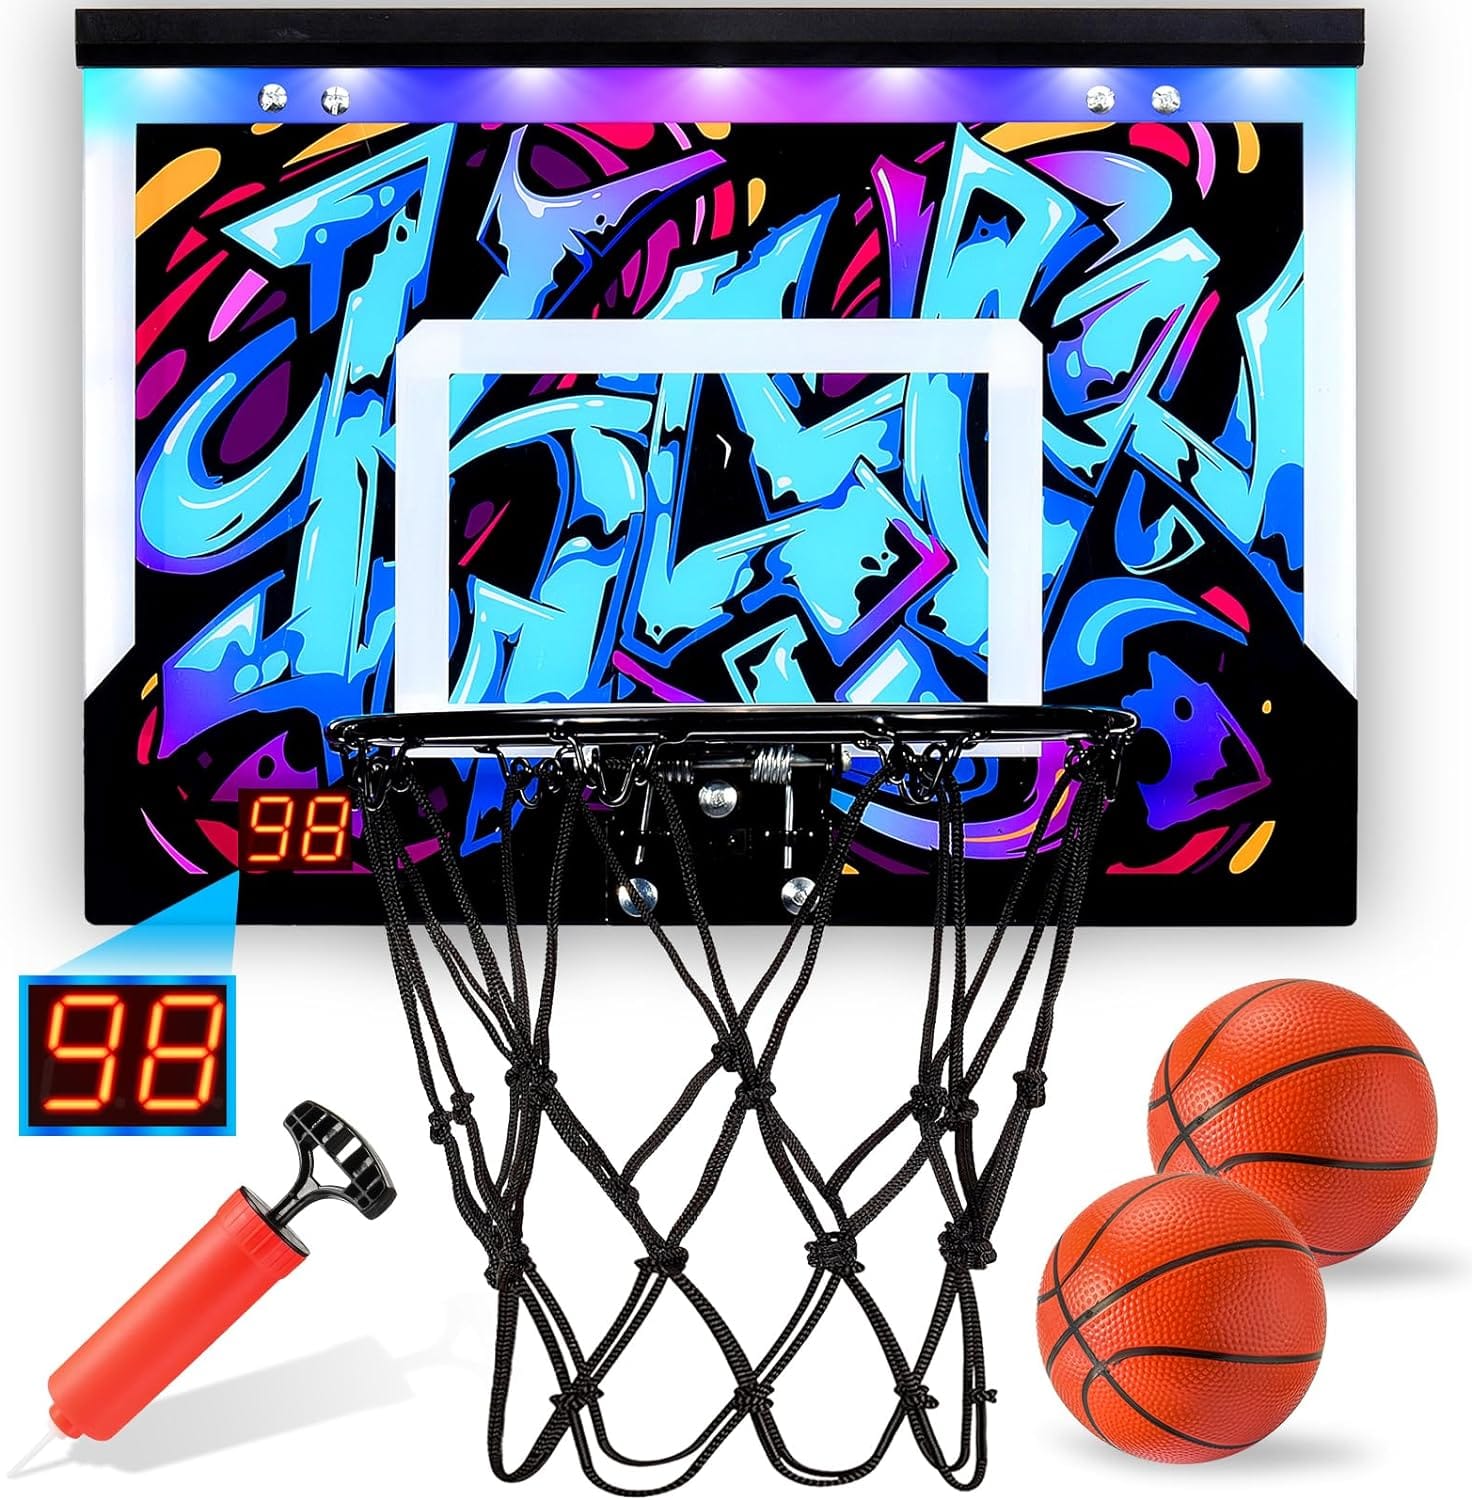 DASTION-99 Mini Basketball Hoop Indoor Review